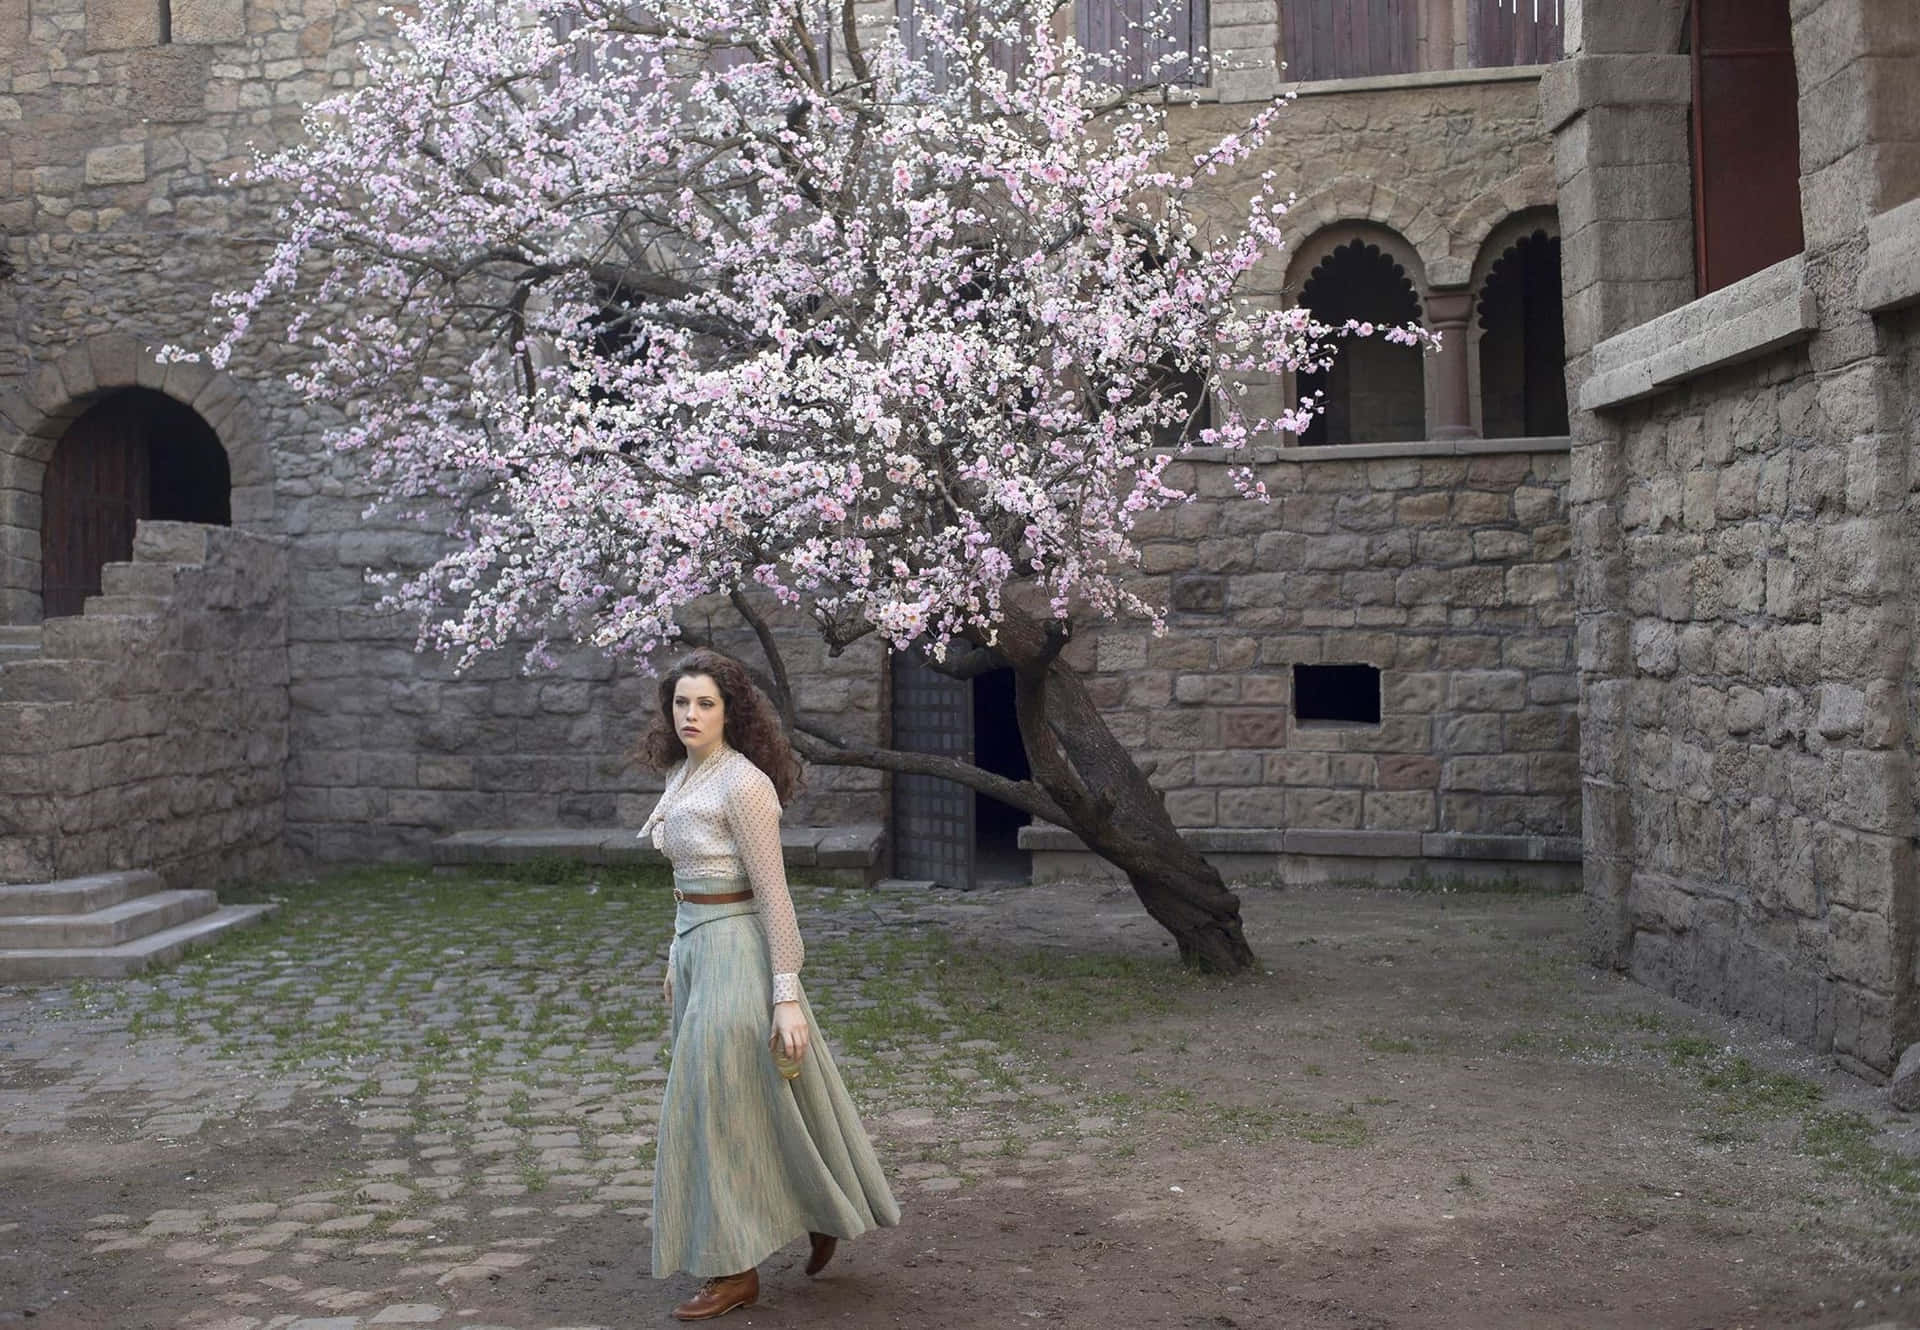 Elegant Woman Blooming Tree Courtyard Wallpaper